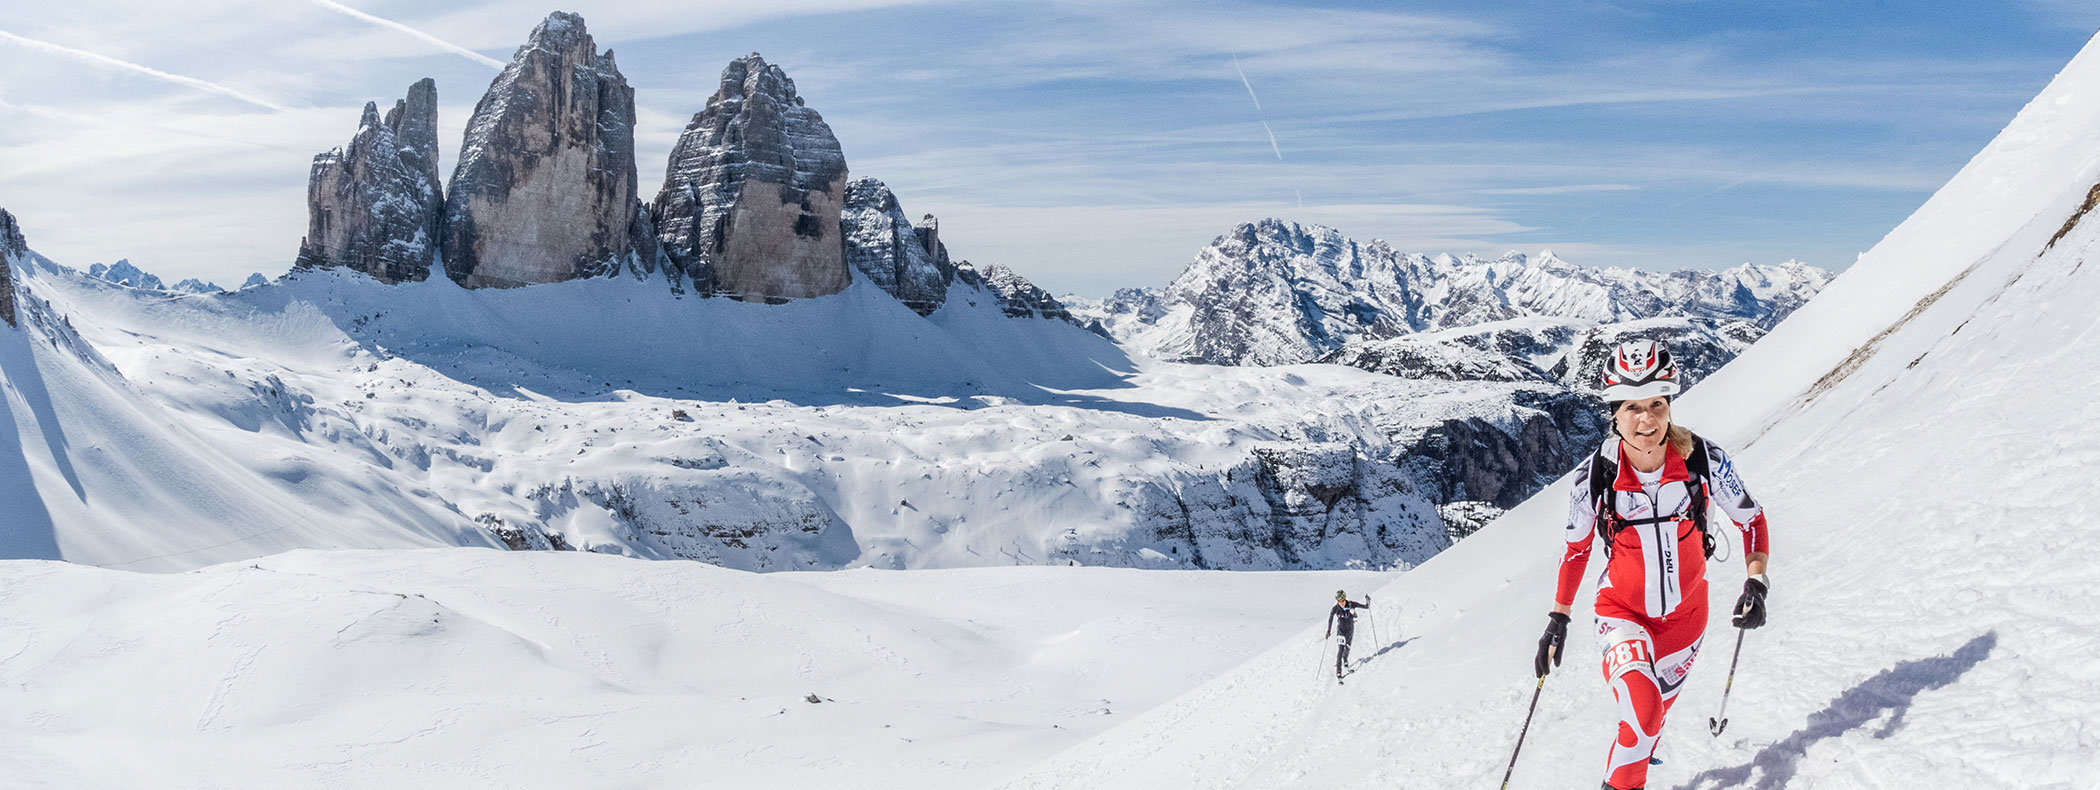 Zinnen Ski Raid - Rules & conditions participation